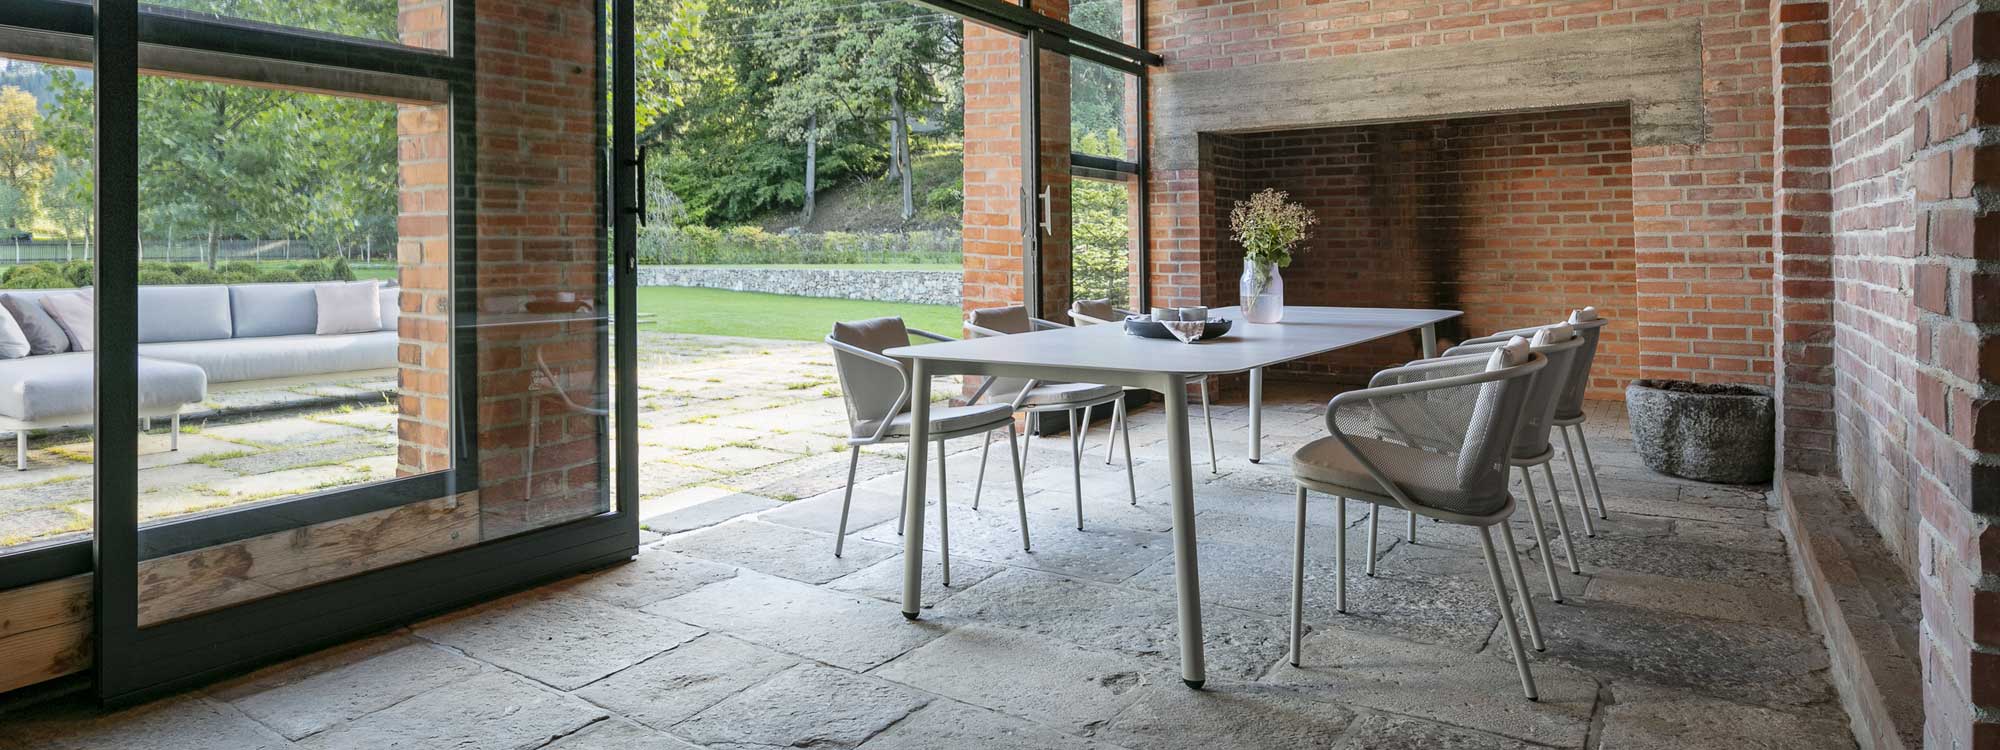 Condor white modern dining set in garden room